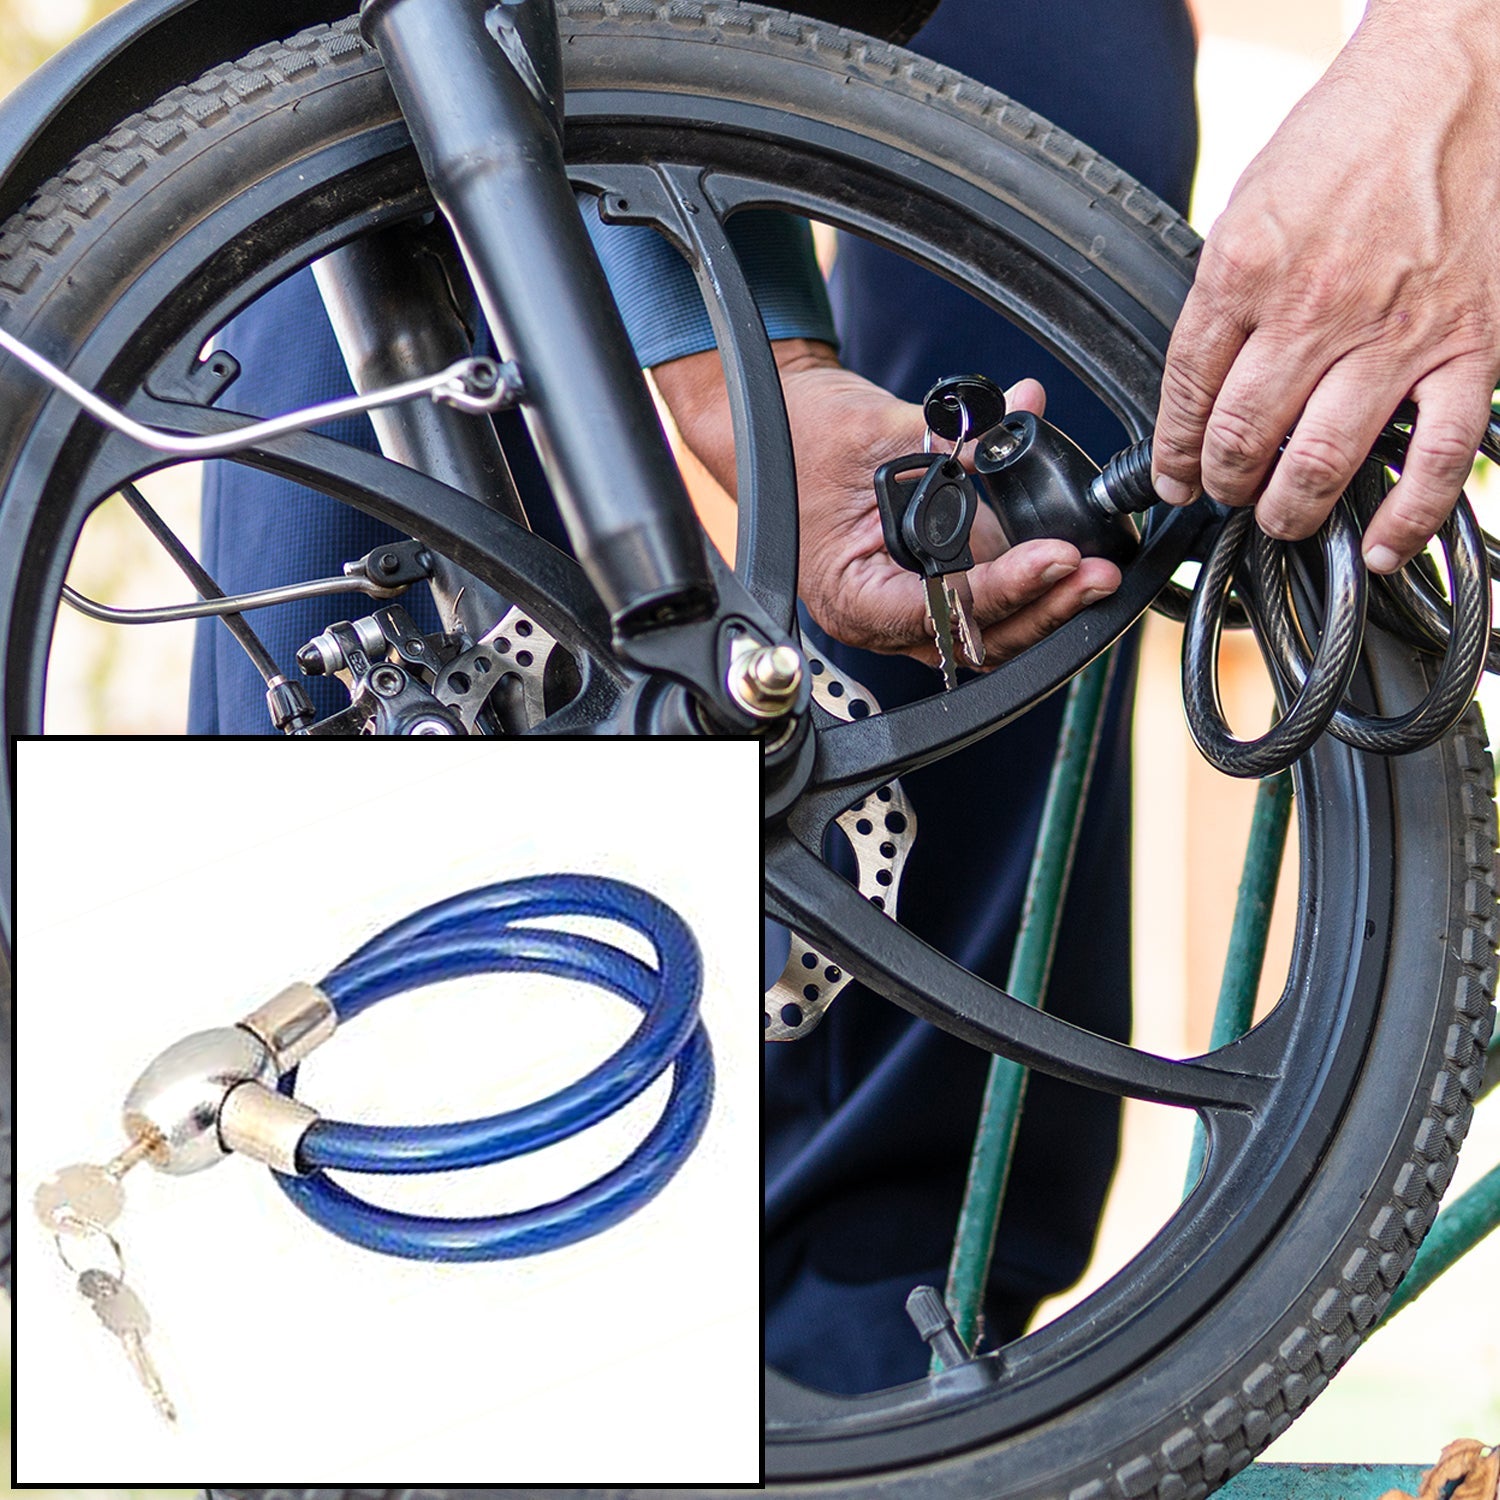 0228A Multipurpose Cable Lock for Bike, Luggage, Steel Keylock, Anti-Theft DeoDap